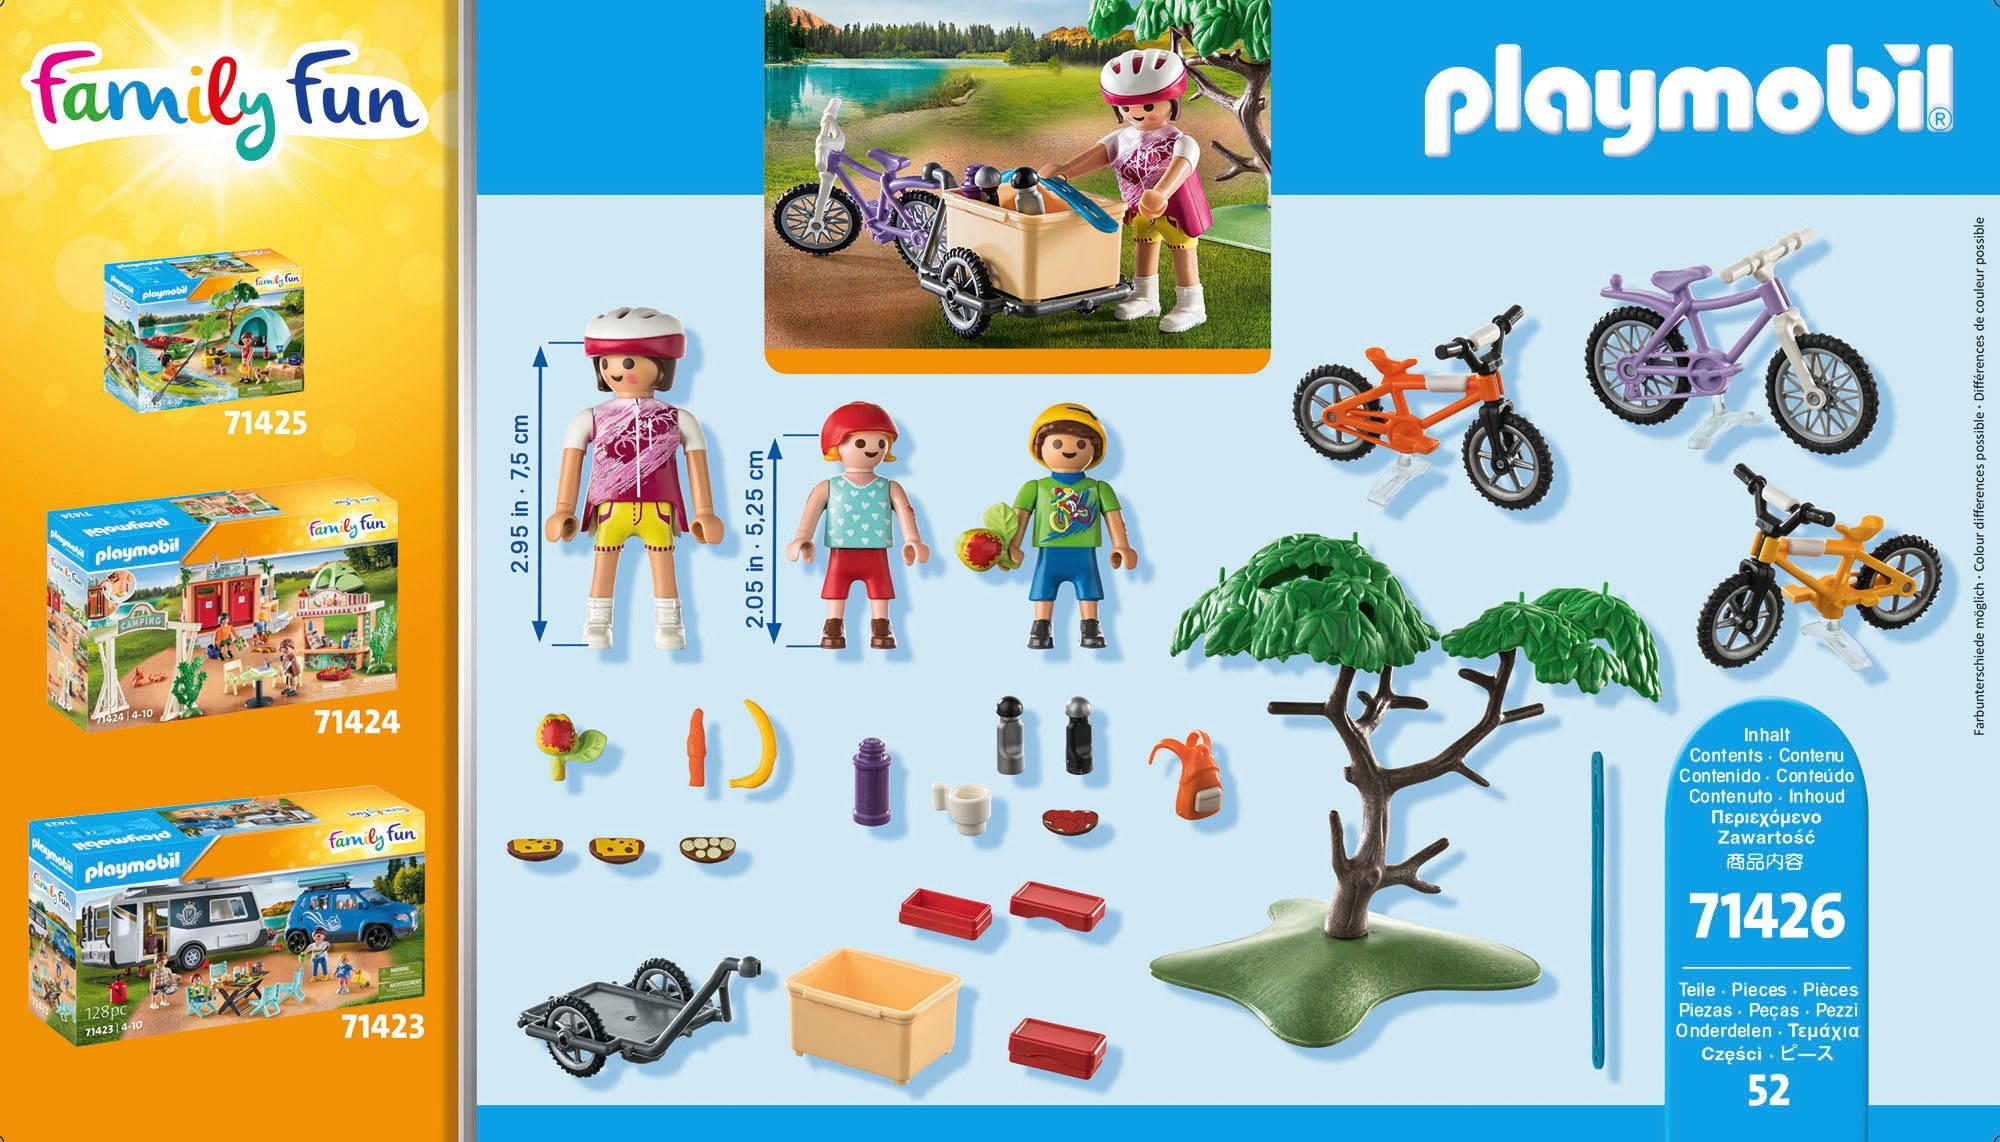 Mountainbike-Tour & Konstruktions-Spielset Family Playmobil® Fun, St) (71426), (52